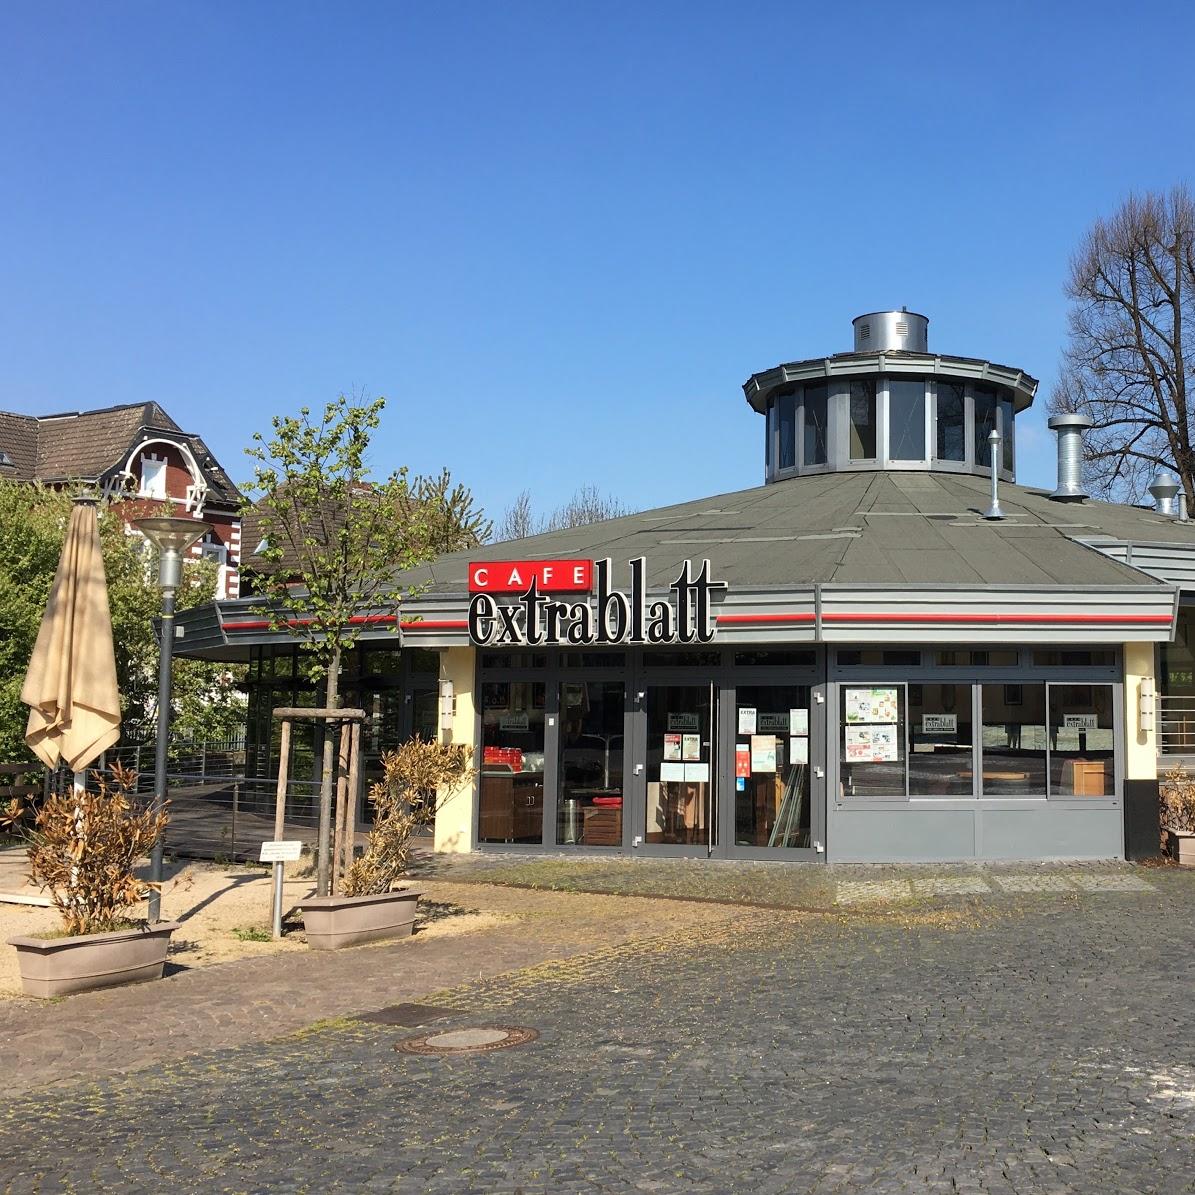 Restaurant "Cafe Extrablatt" in Bergheim